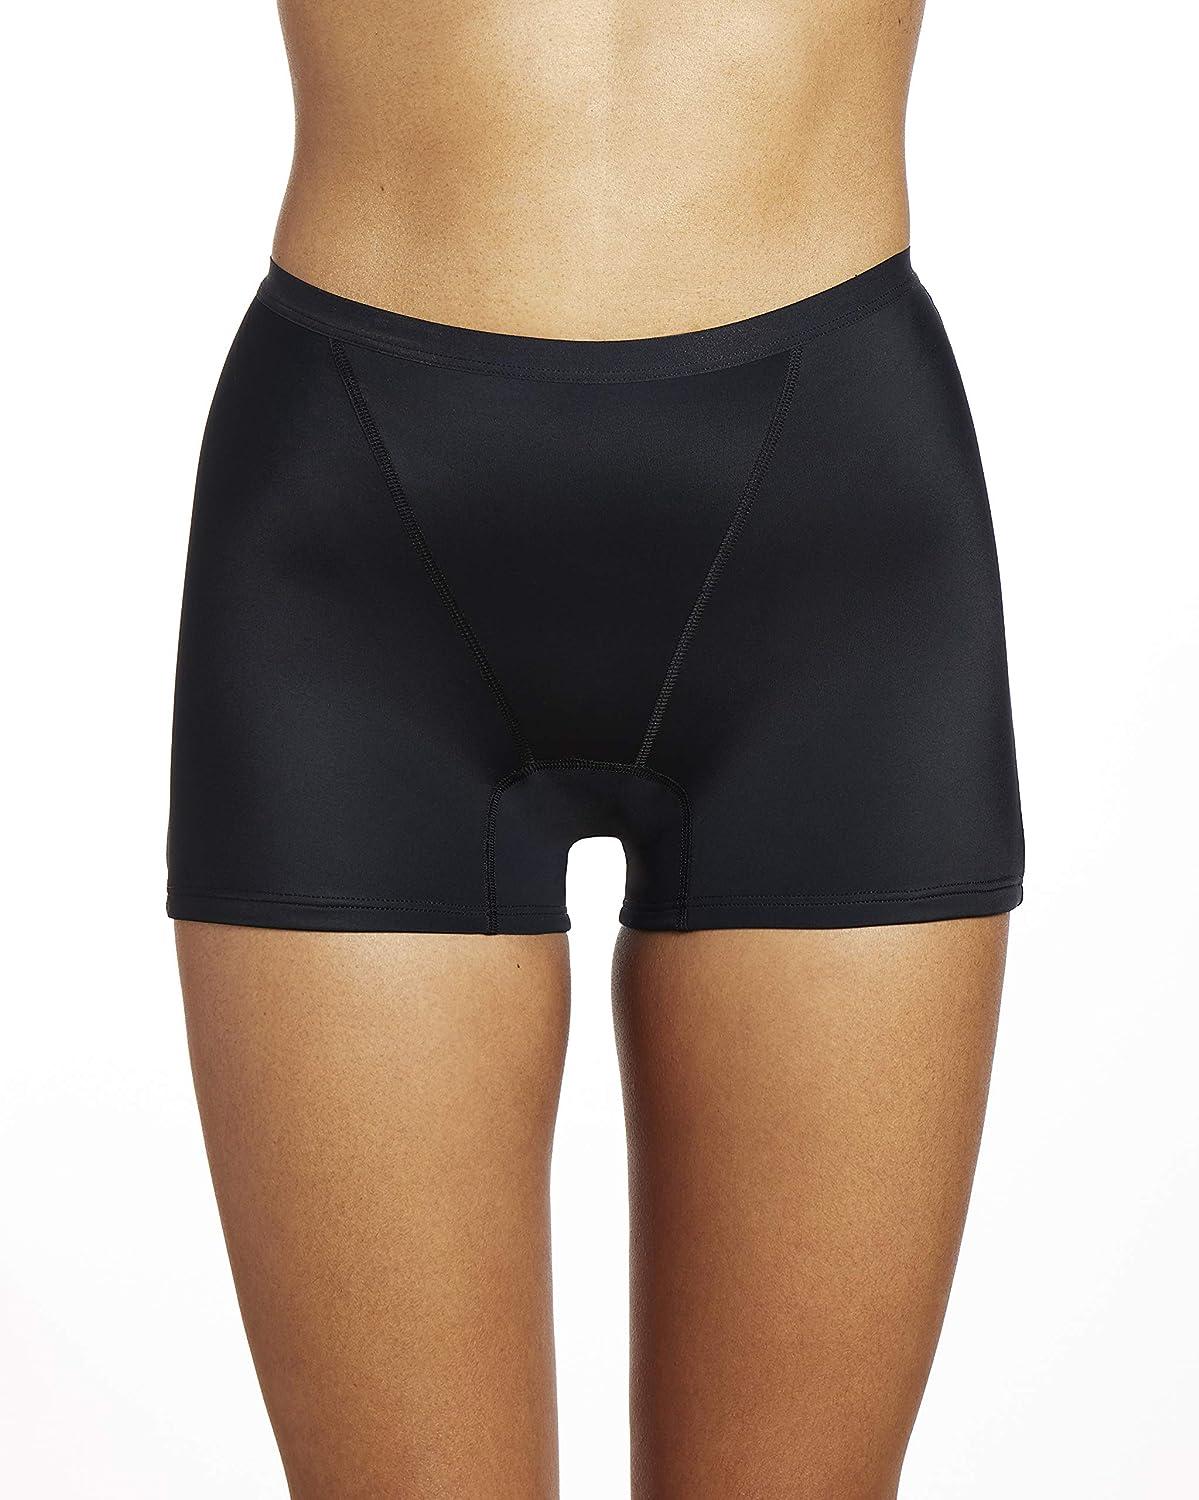 THINX Hiphugger Period Underwear for Women, Super Absorbency